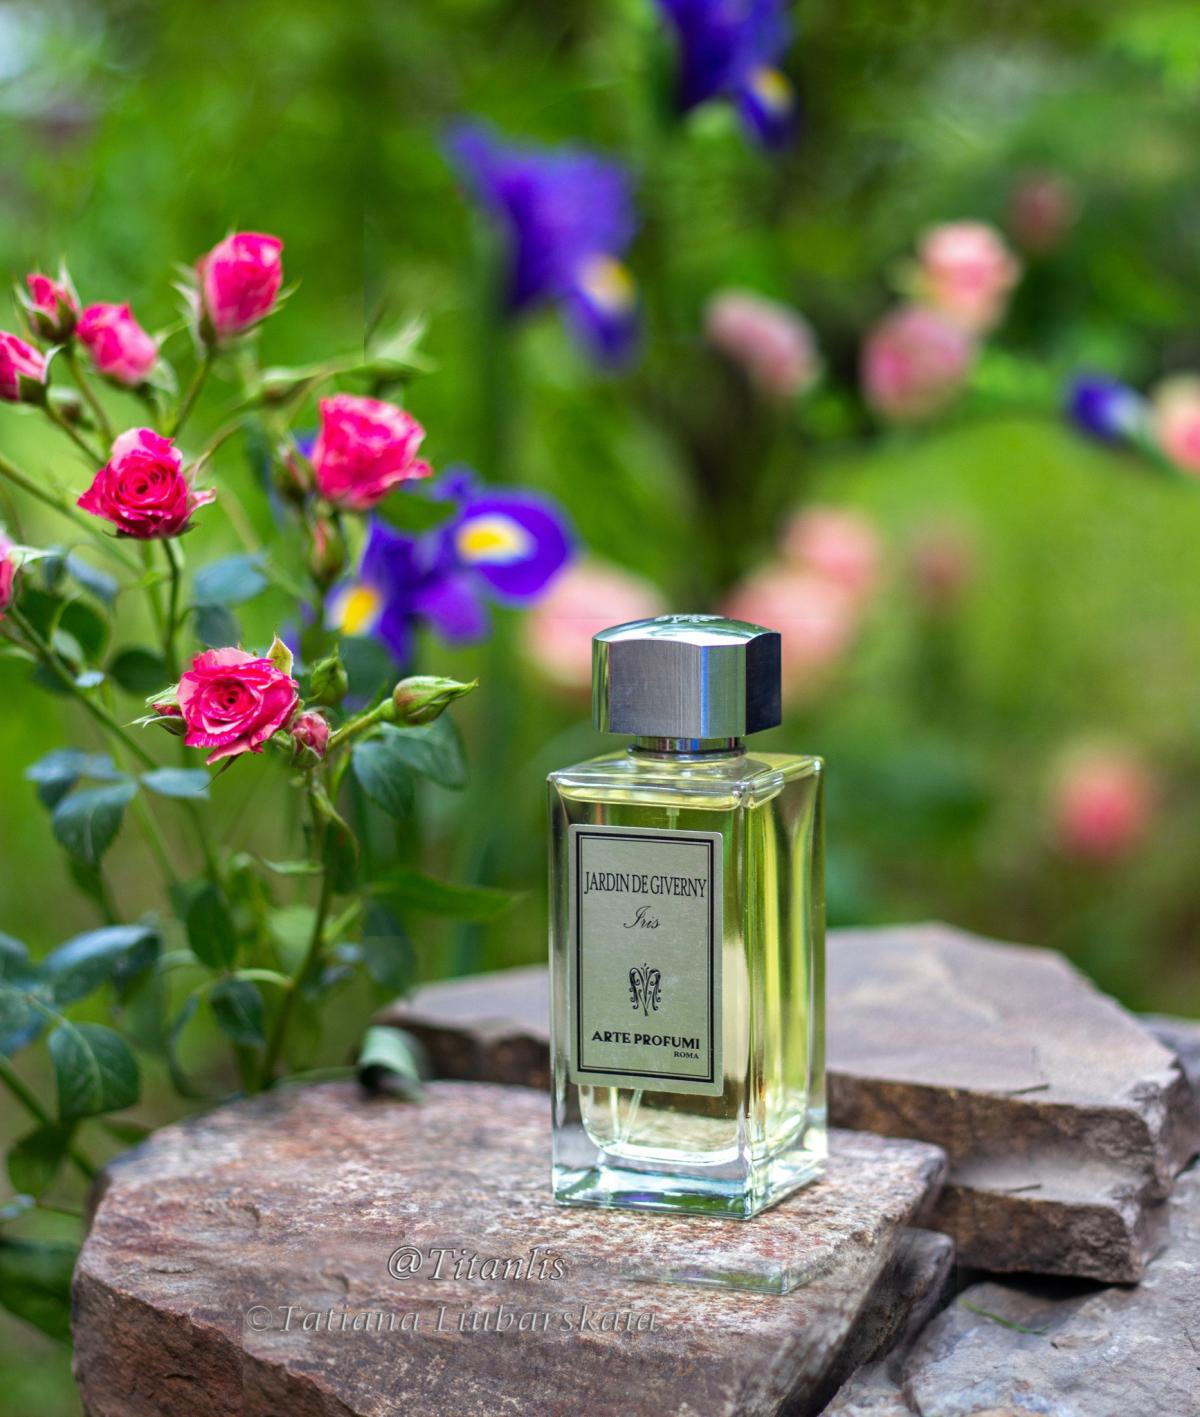 Jardin de Giverny Arte Profumi perfume - a fragrance for women and men 2015